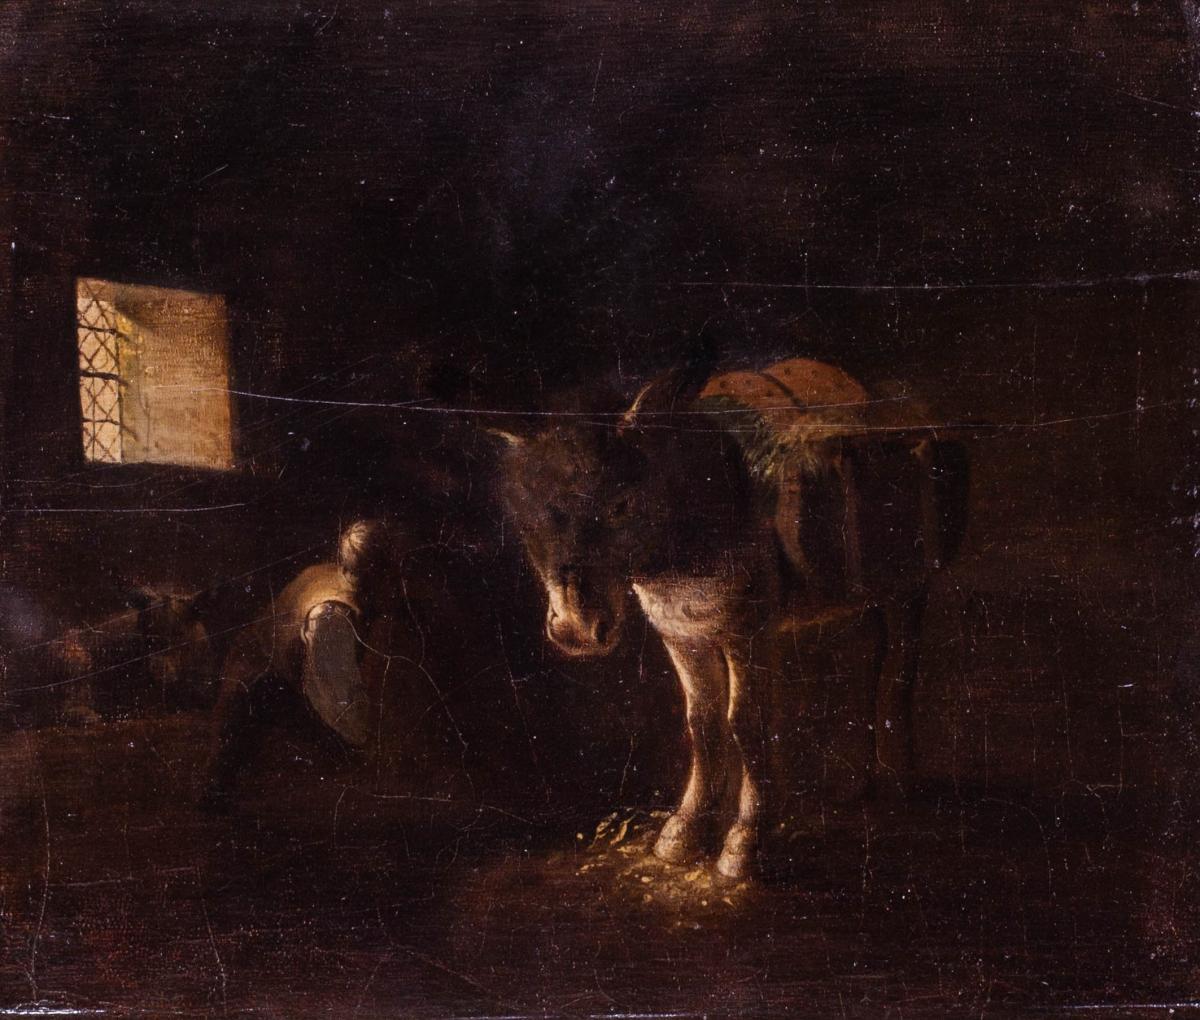 Dutch School, 18th Century, A farmhand tending to donkeys in a stable